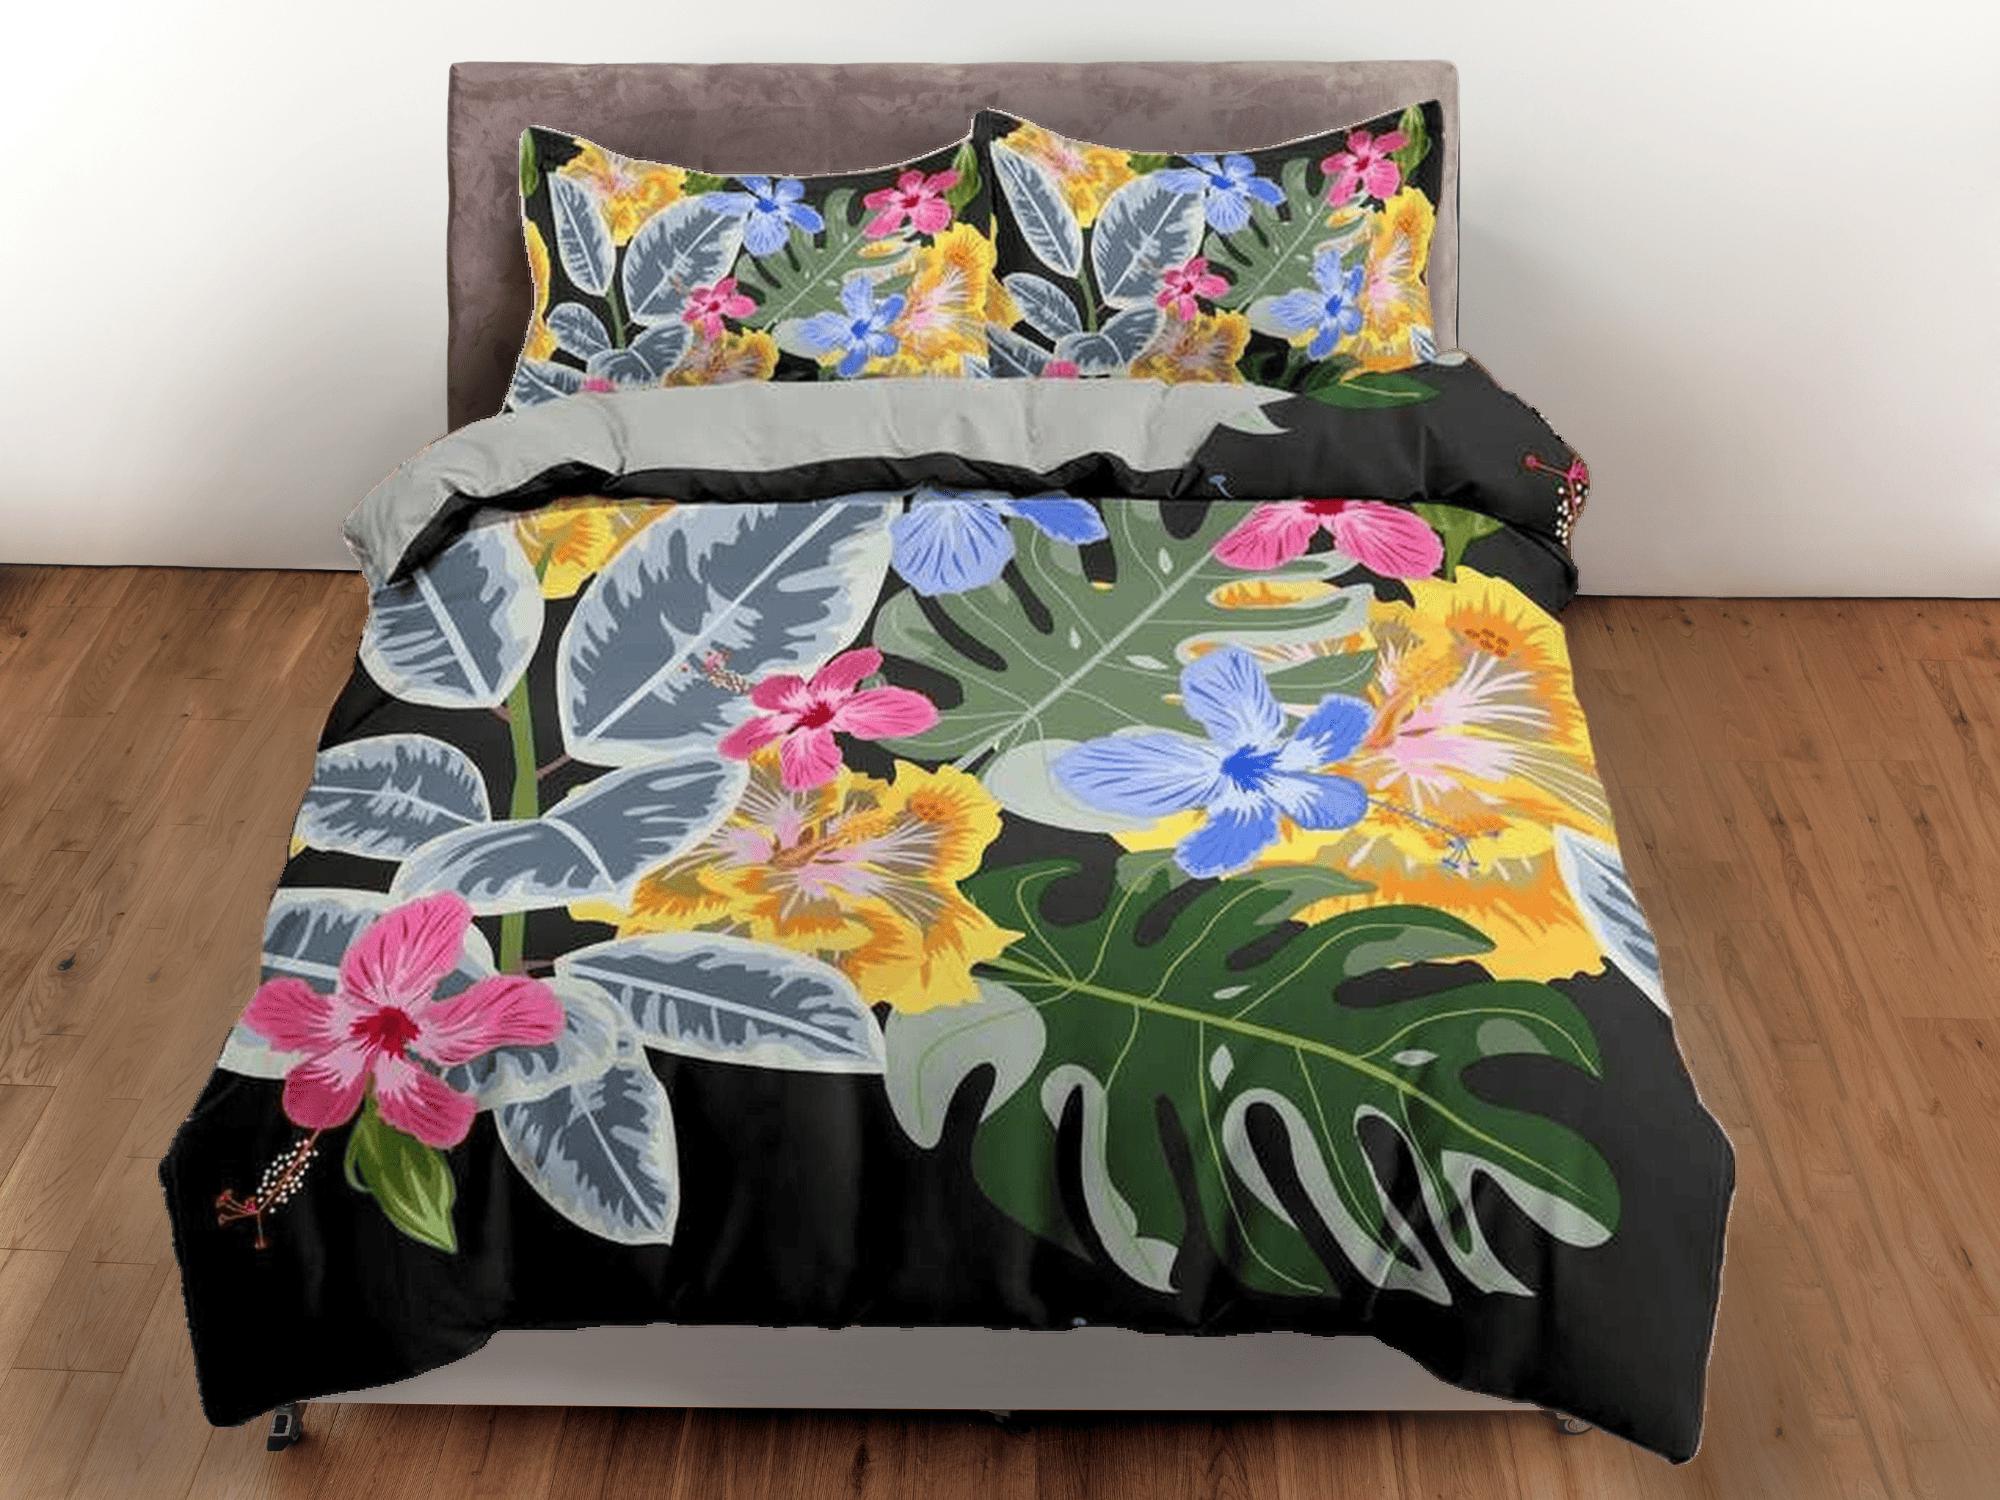 daintyduvet Tropical floral duvet cover colorful bedding, teen girl bedroom, baby girl crib bedding boho maximalist bedspread aesthetic bedding